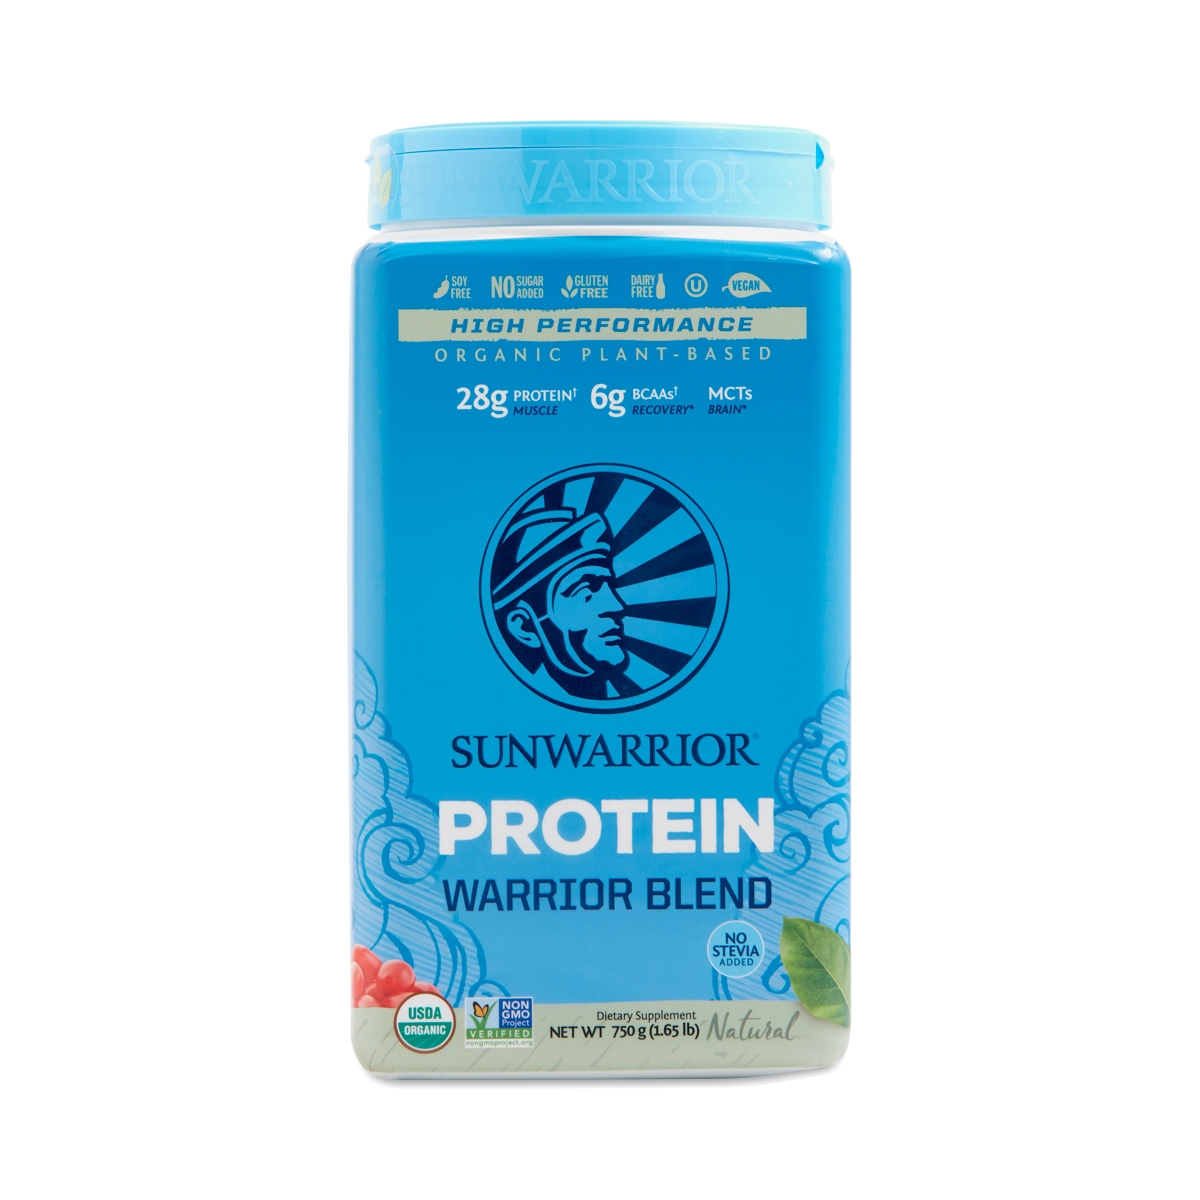 Sunwarrior Warrior Natural Protein Blend 1.65 lb container